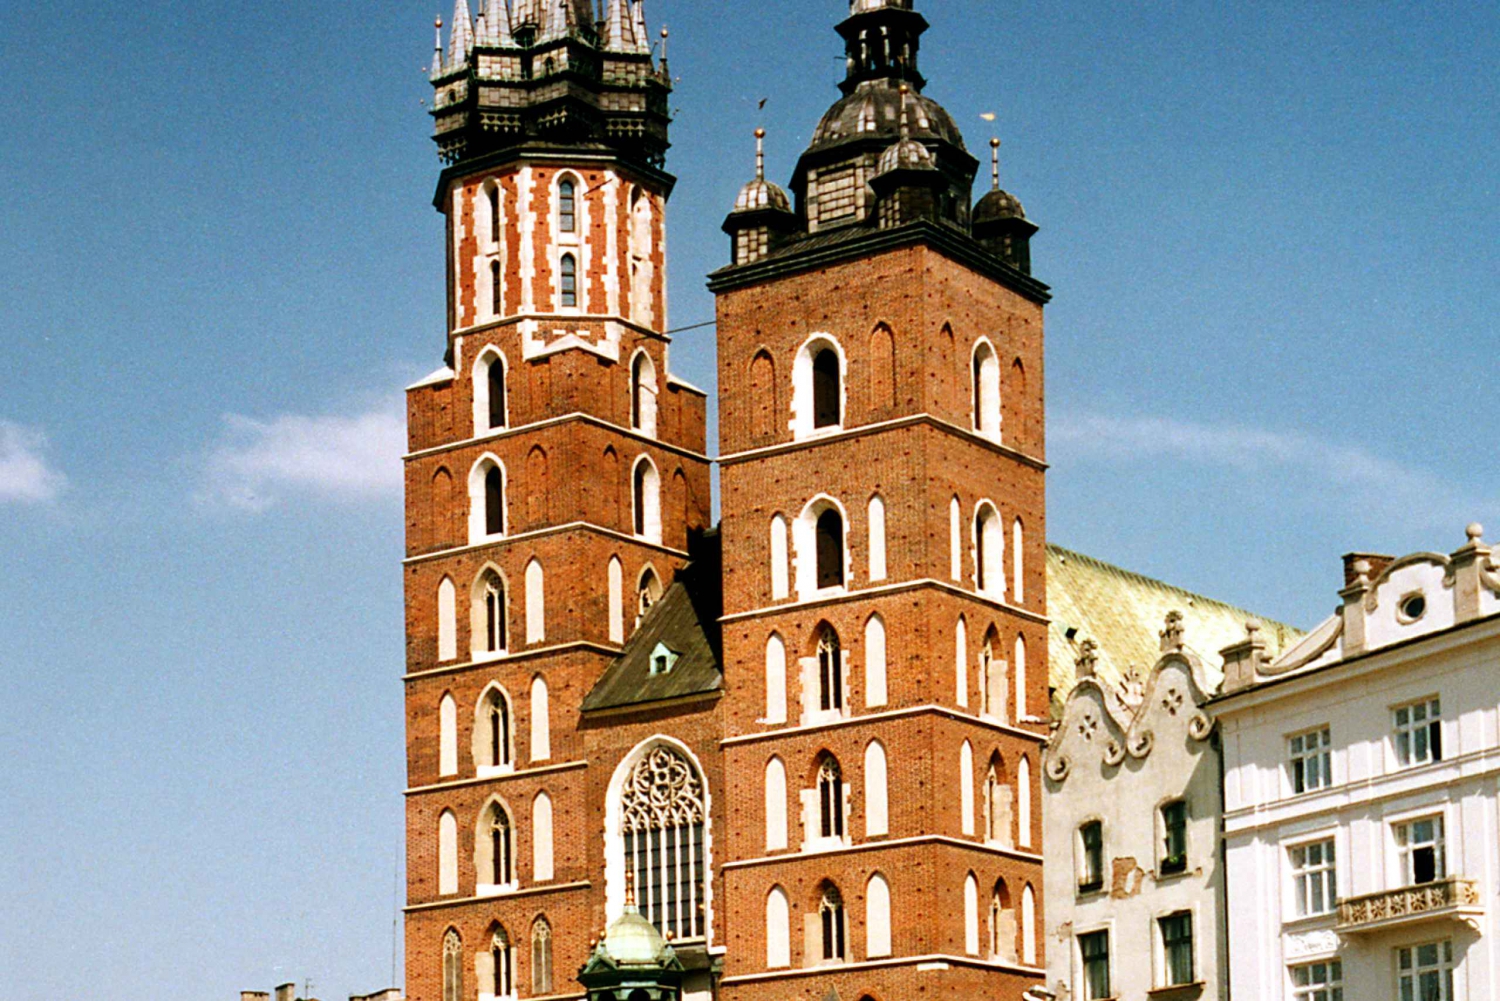 Krakow: City Pass Krakow Card